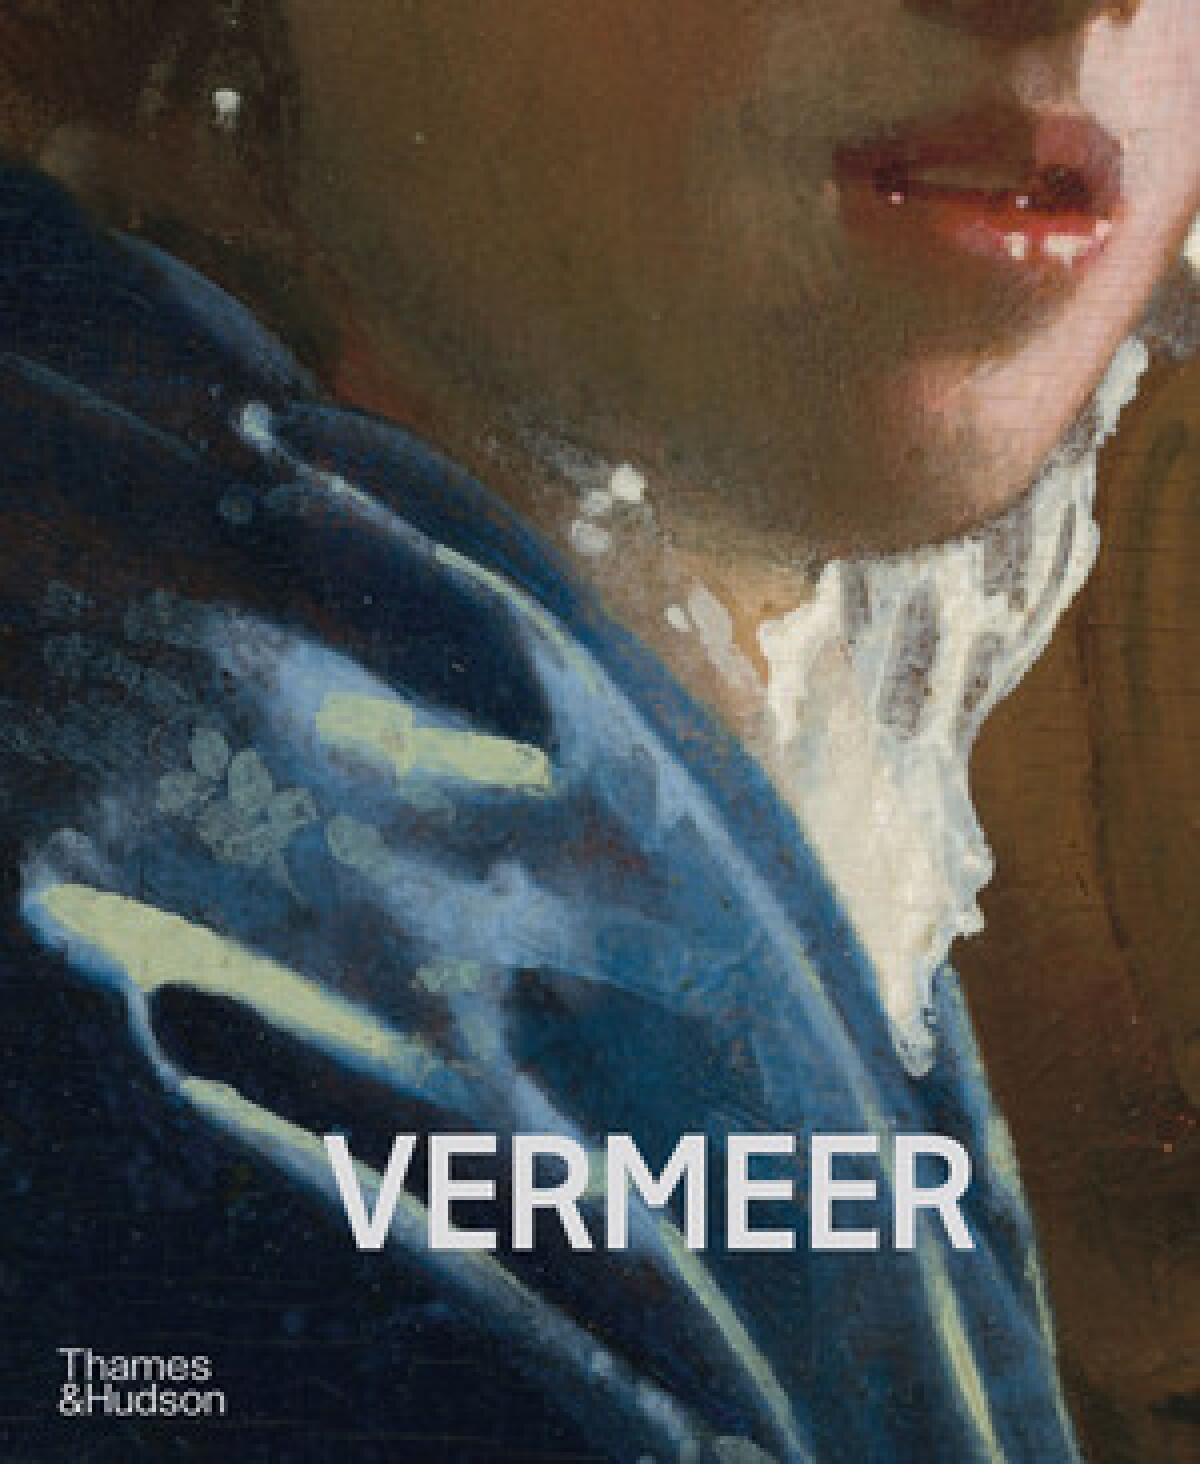 "Vermeer" is the catalog to Amsterdam's Rijksmuseum exhibition